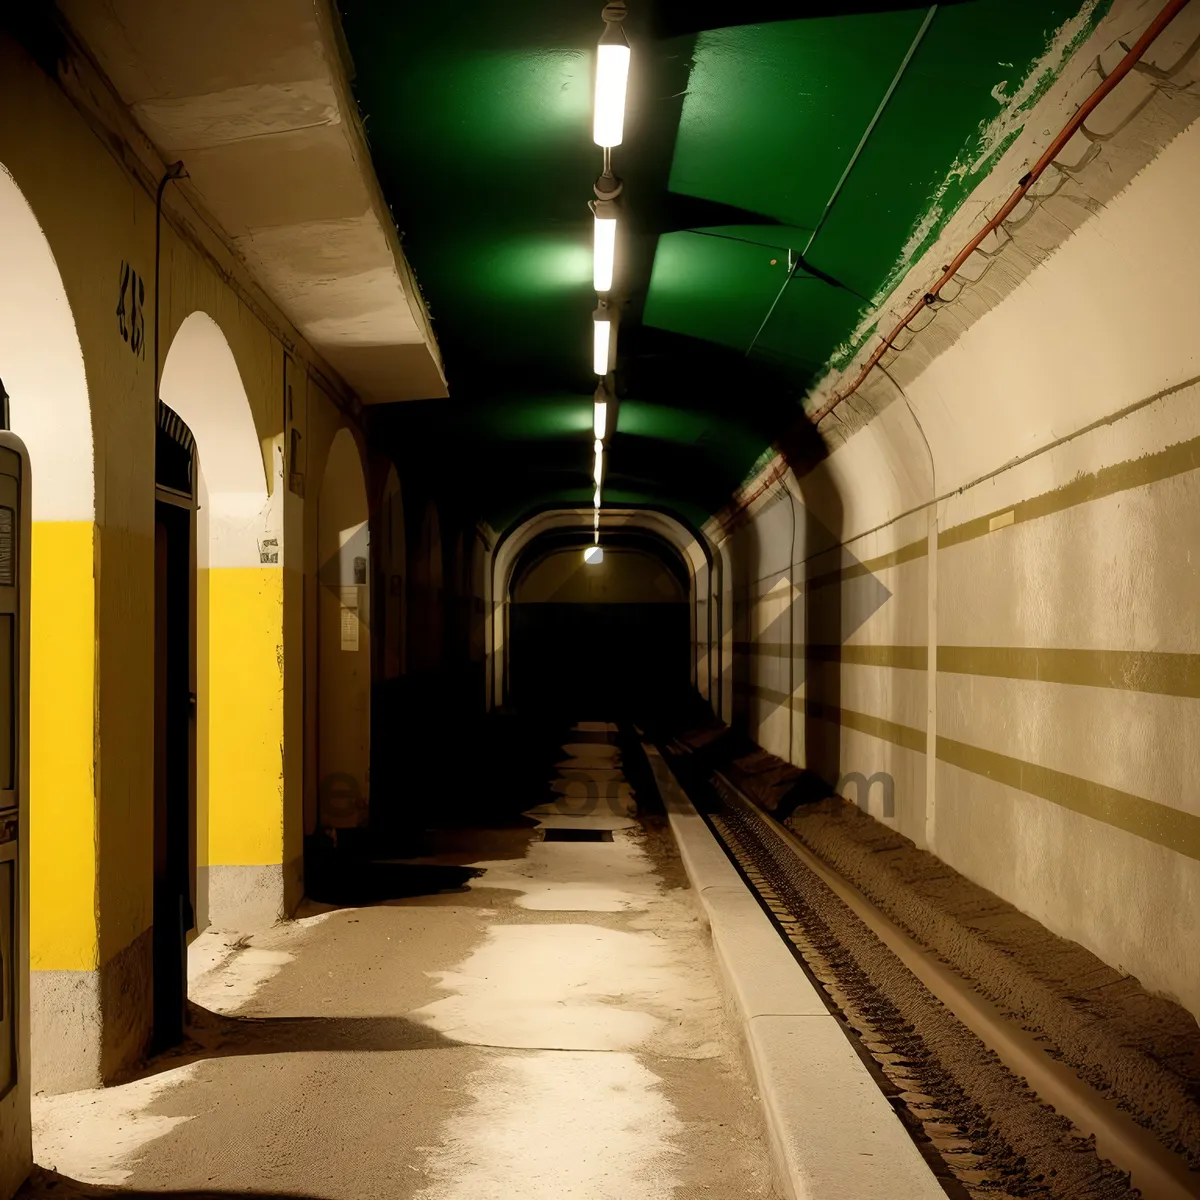 Picture of Urban Subway Terminal Interior with Architectural Corridor